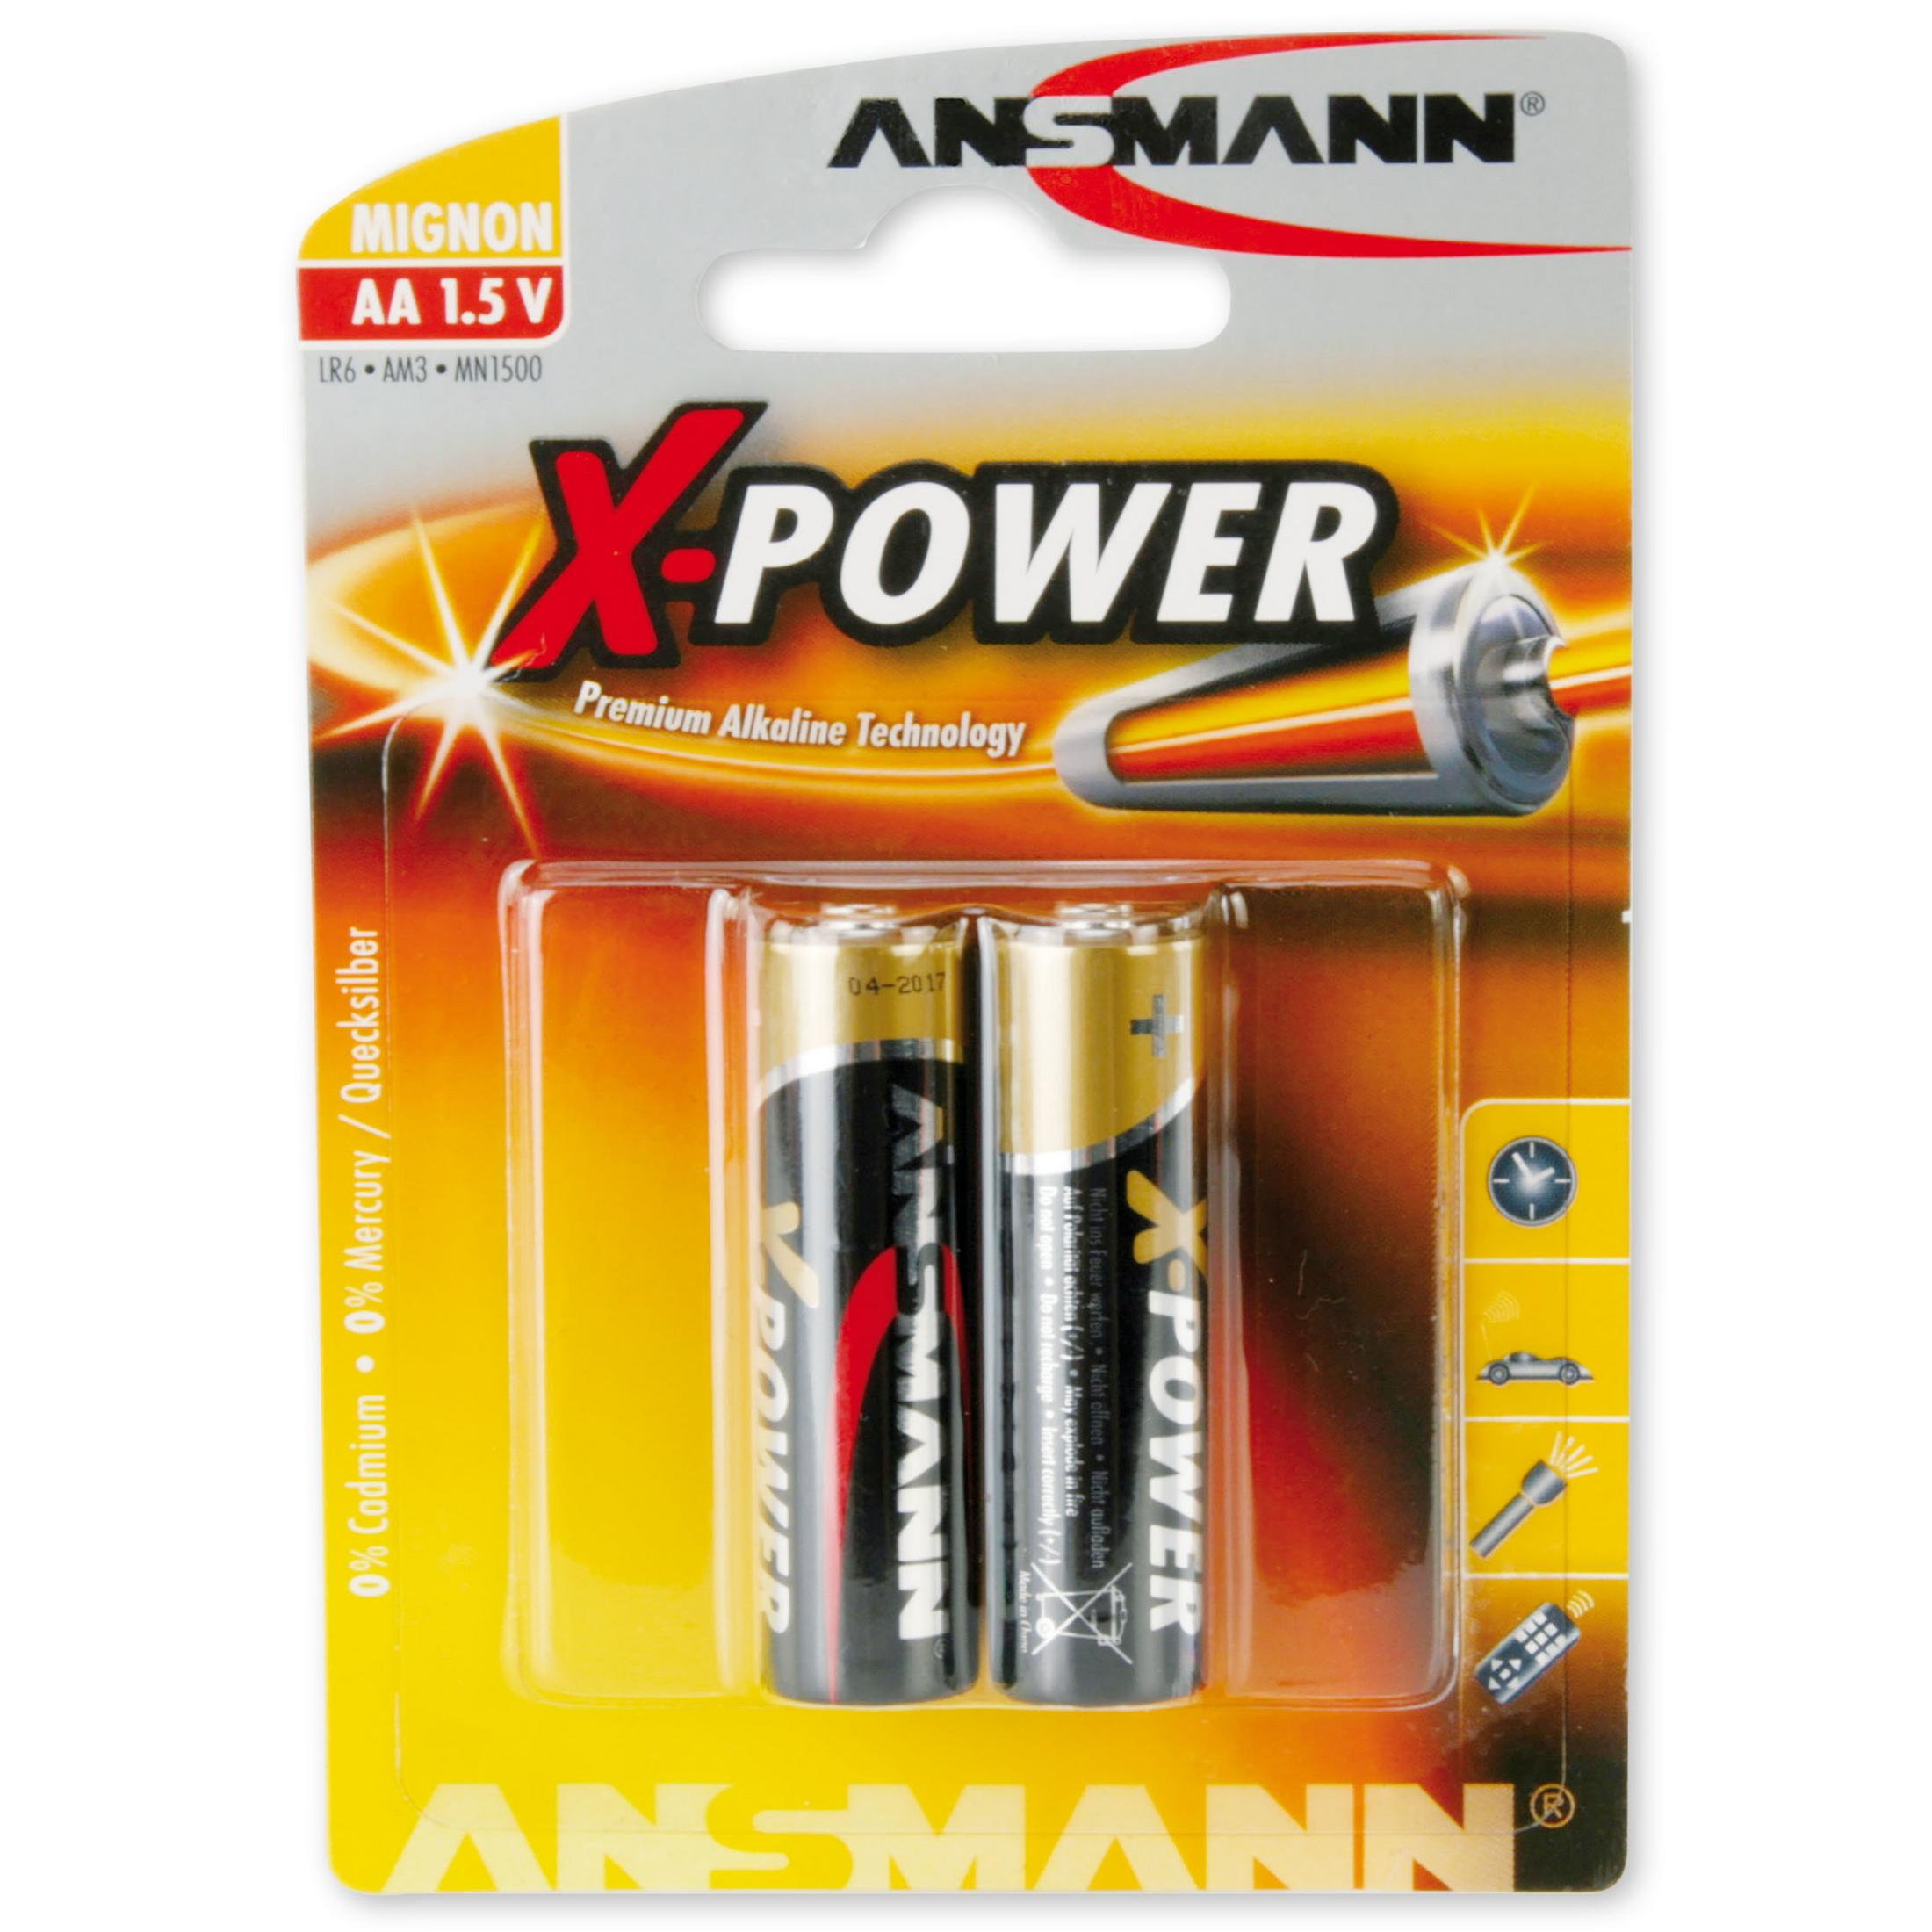 ANSMANN ANSMANN Batterie Alkaline, Energie 1.5 / Batterien 5015613 Volt AA, Batterien, Strom Stück Mignon 2 Alkaline 2er-Pack